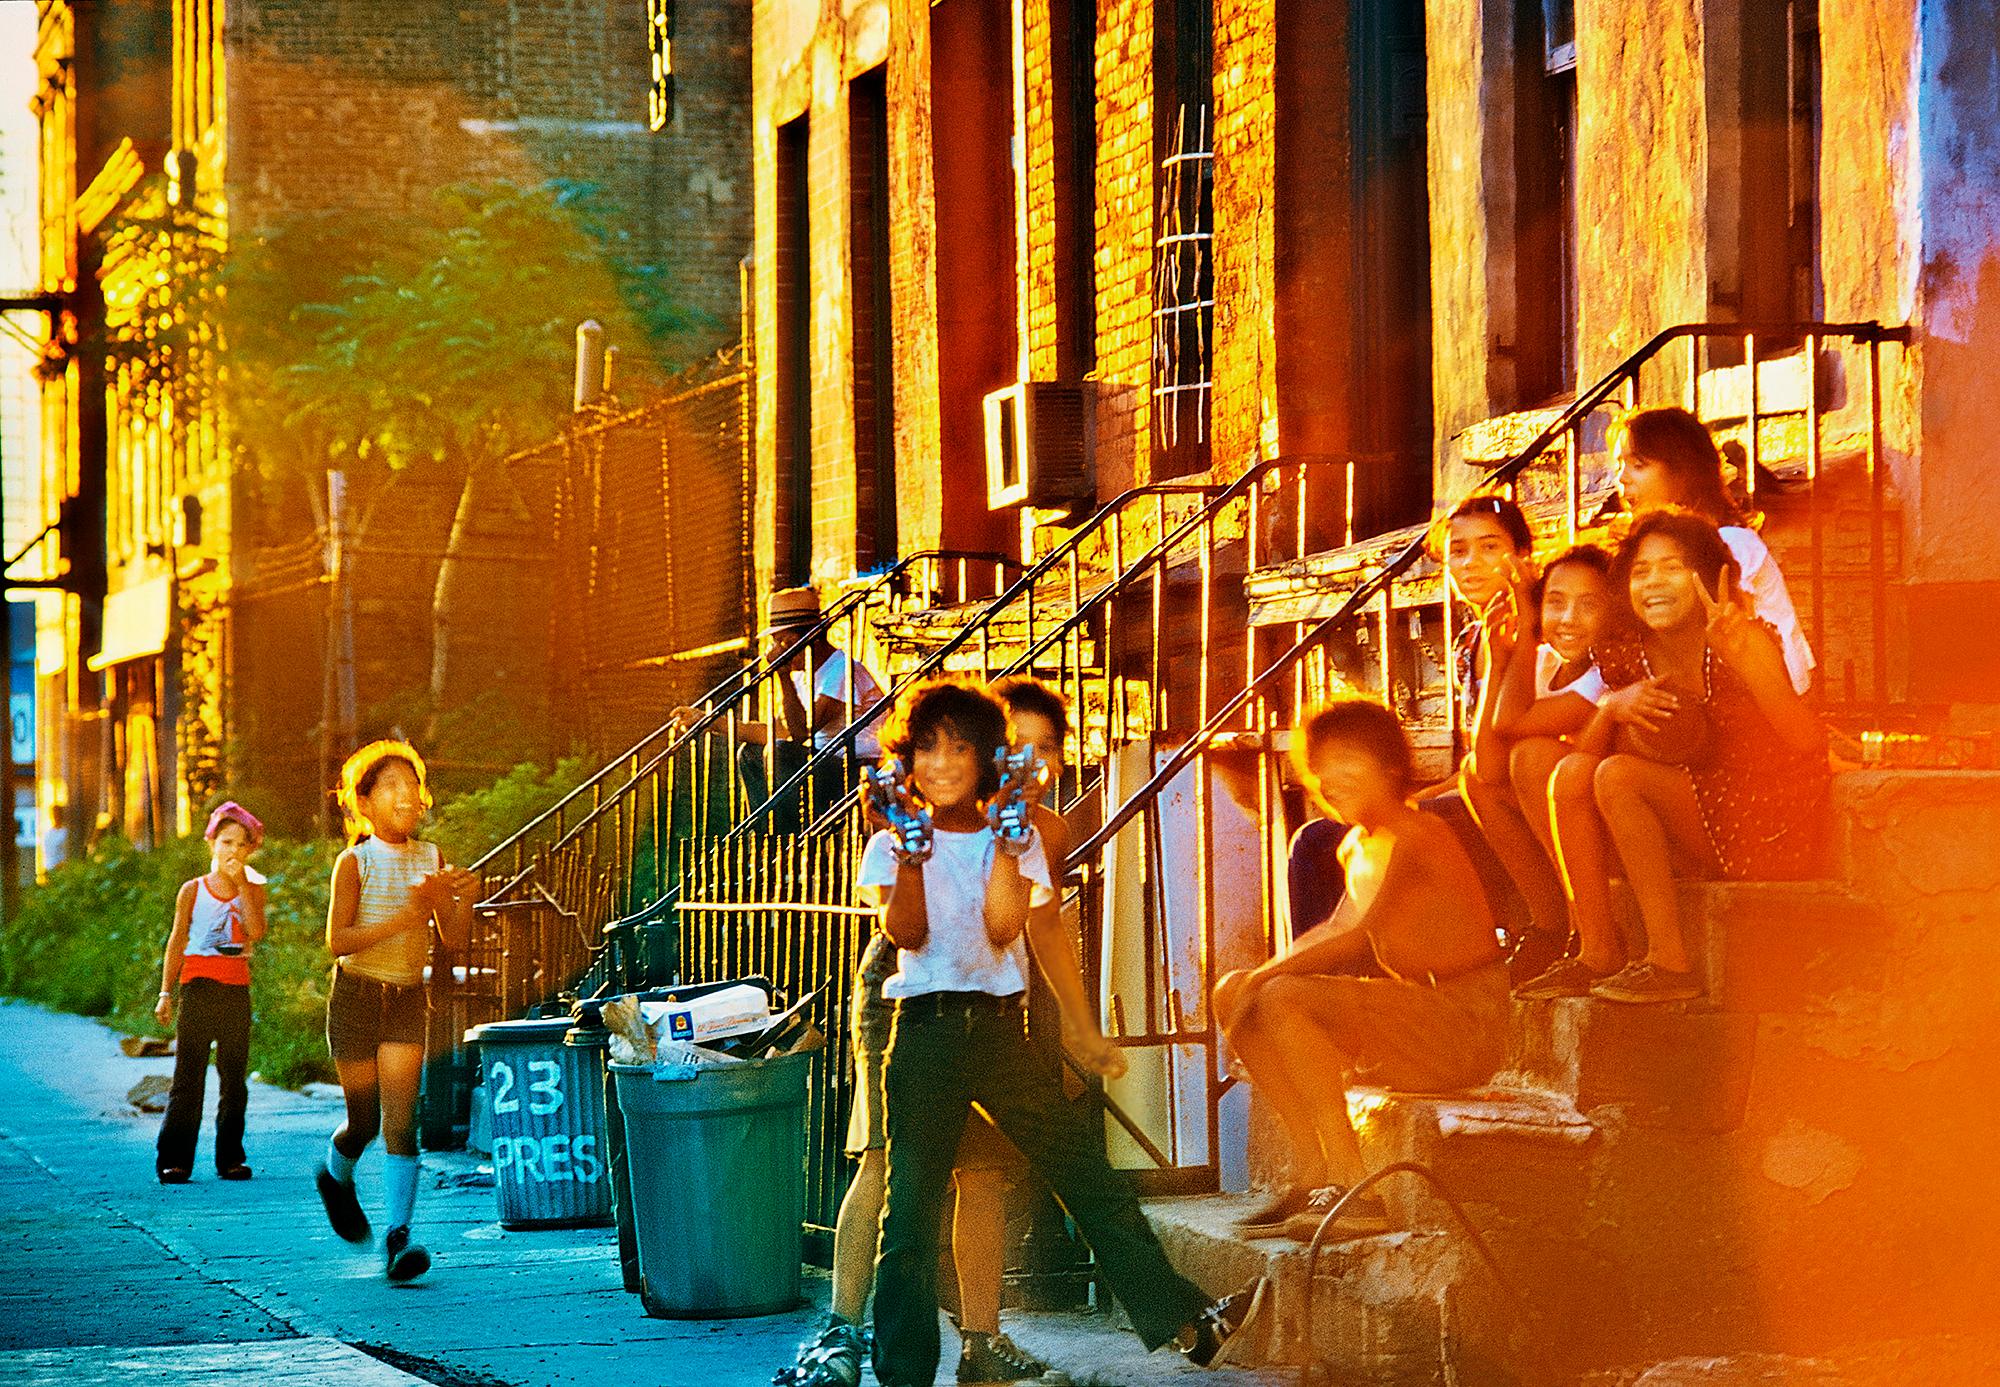 Mitchell Funk Color Photograph - Neighborhood Kids on Stoop in Red Hood Brooklyn  - Vintage Brooklyn 